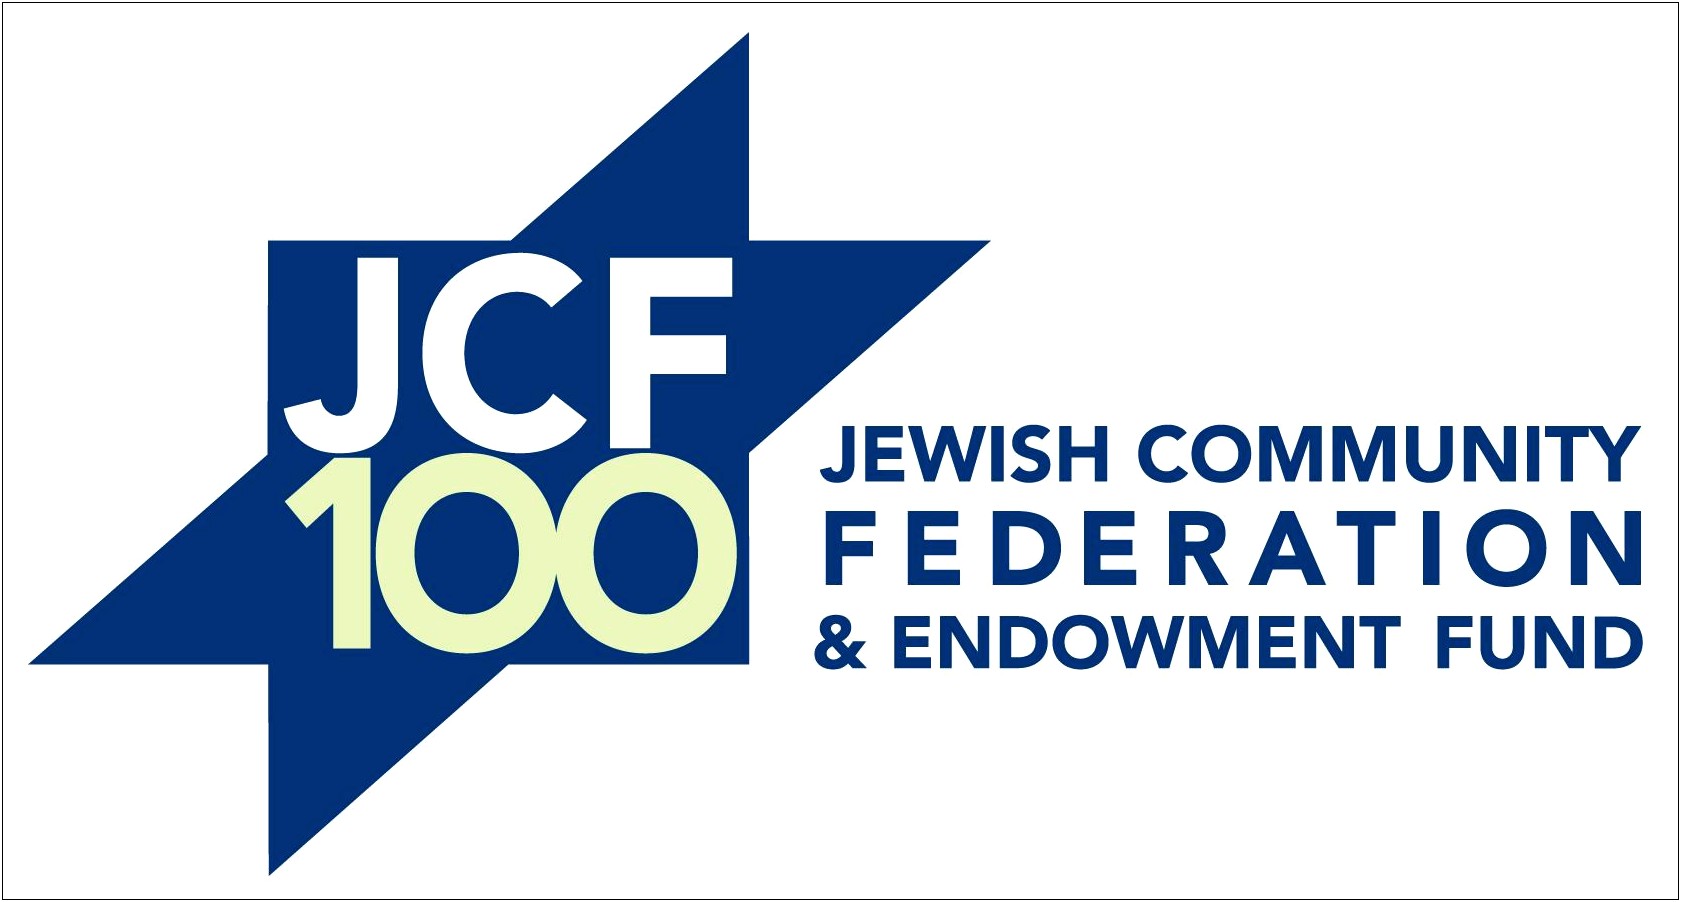 Resume National Jewish Federation Outreach Job Discrumtion